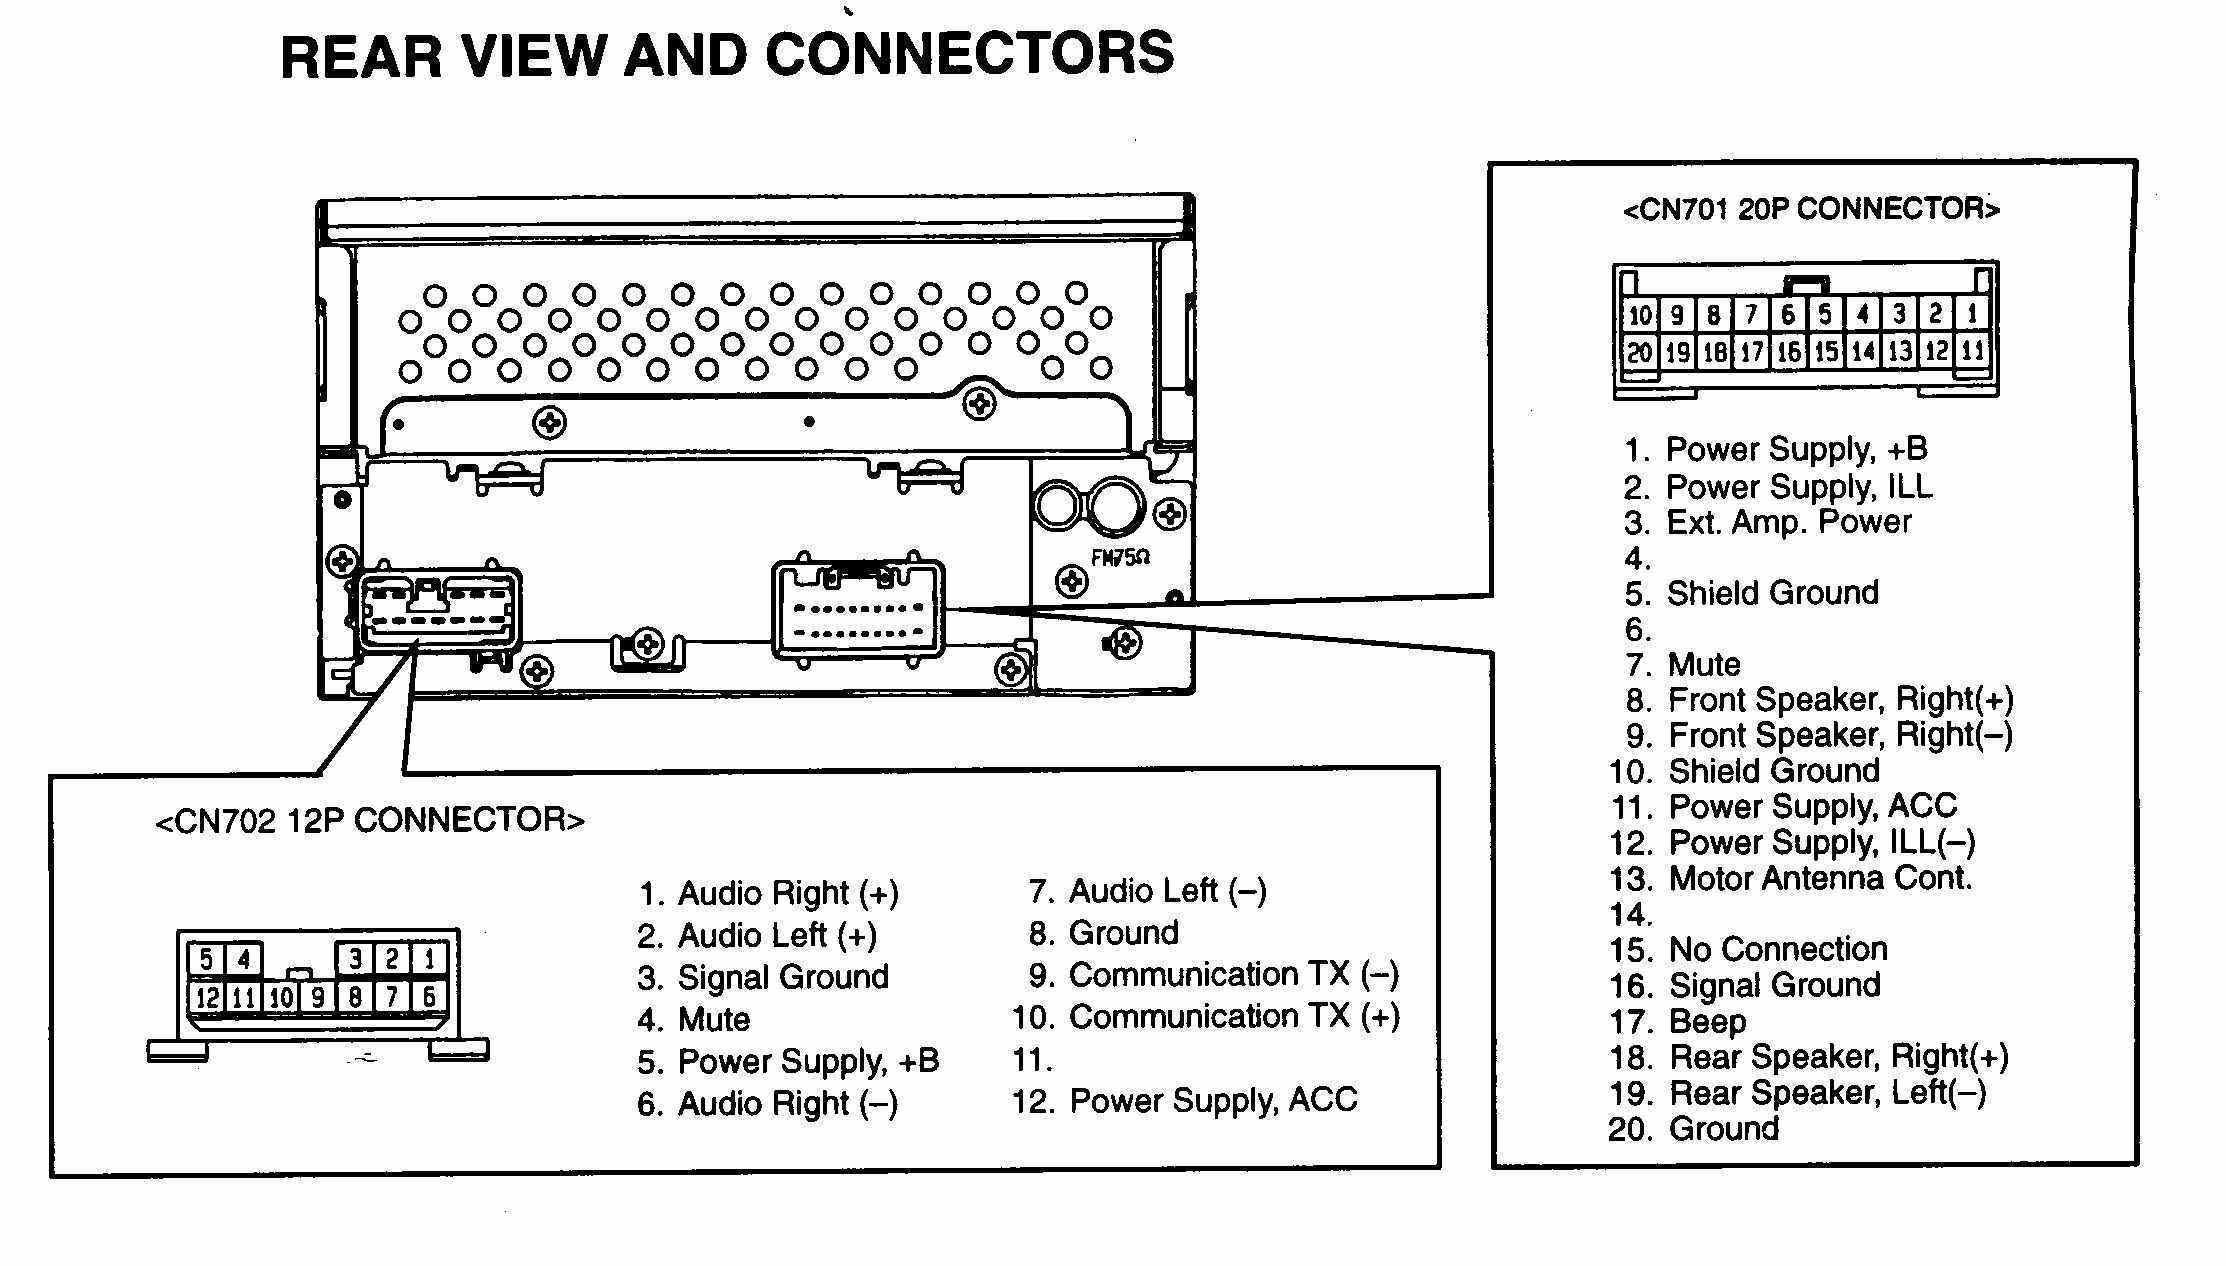 2001 Delphi Delco Electronics Wiring Diagram | Wiring Diagram - Delphi Radio Wiring Diagram